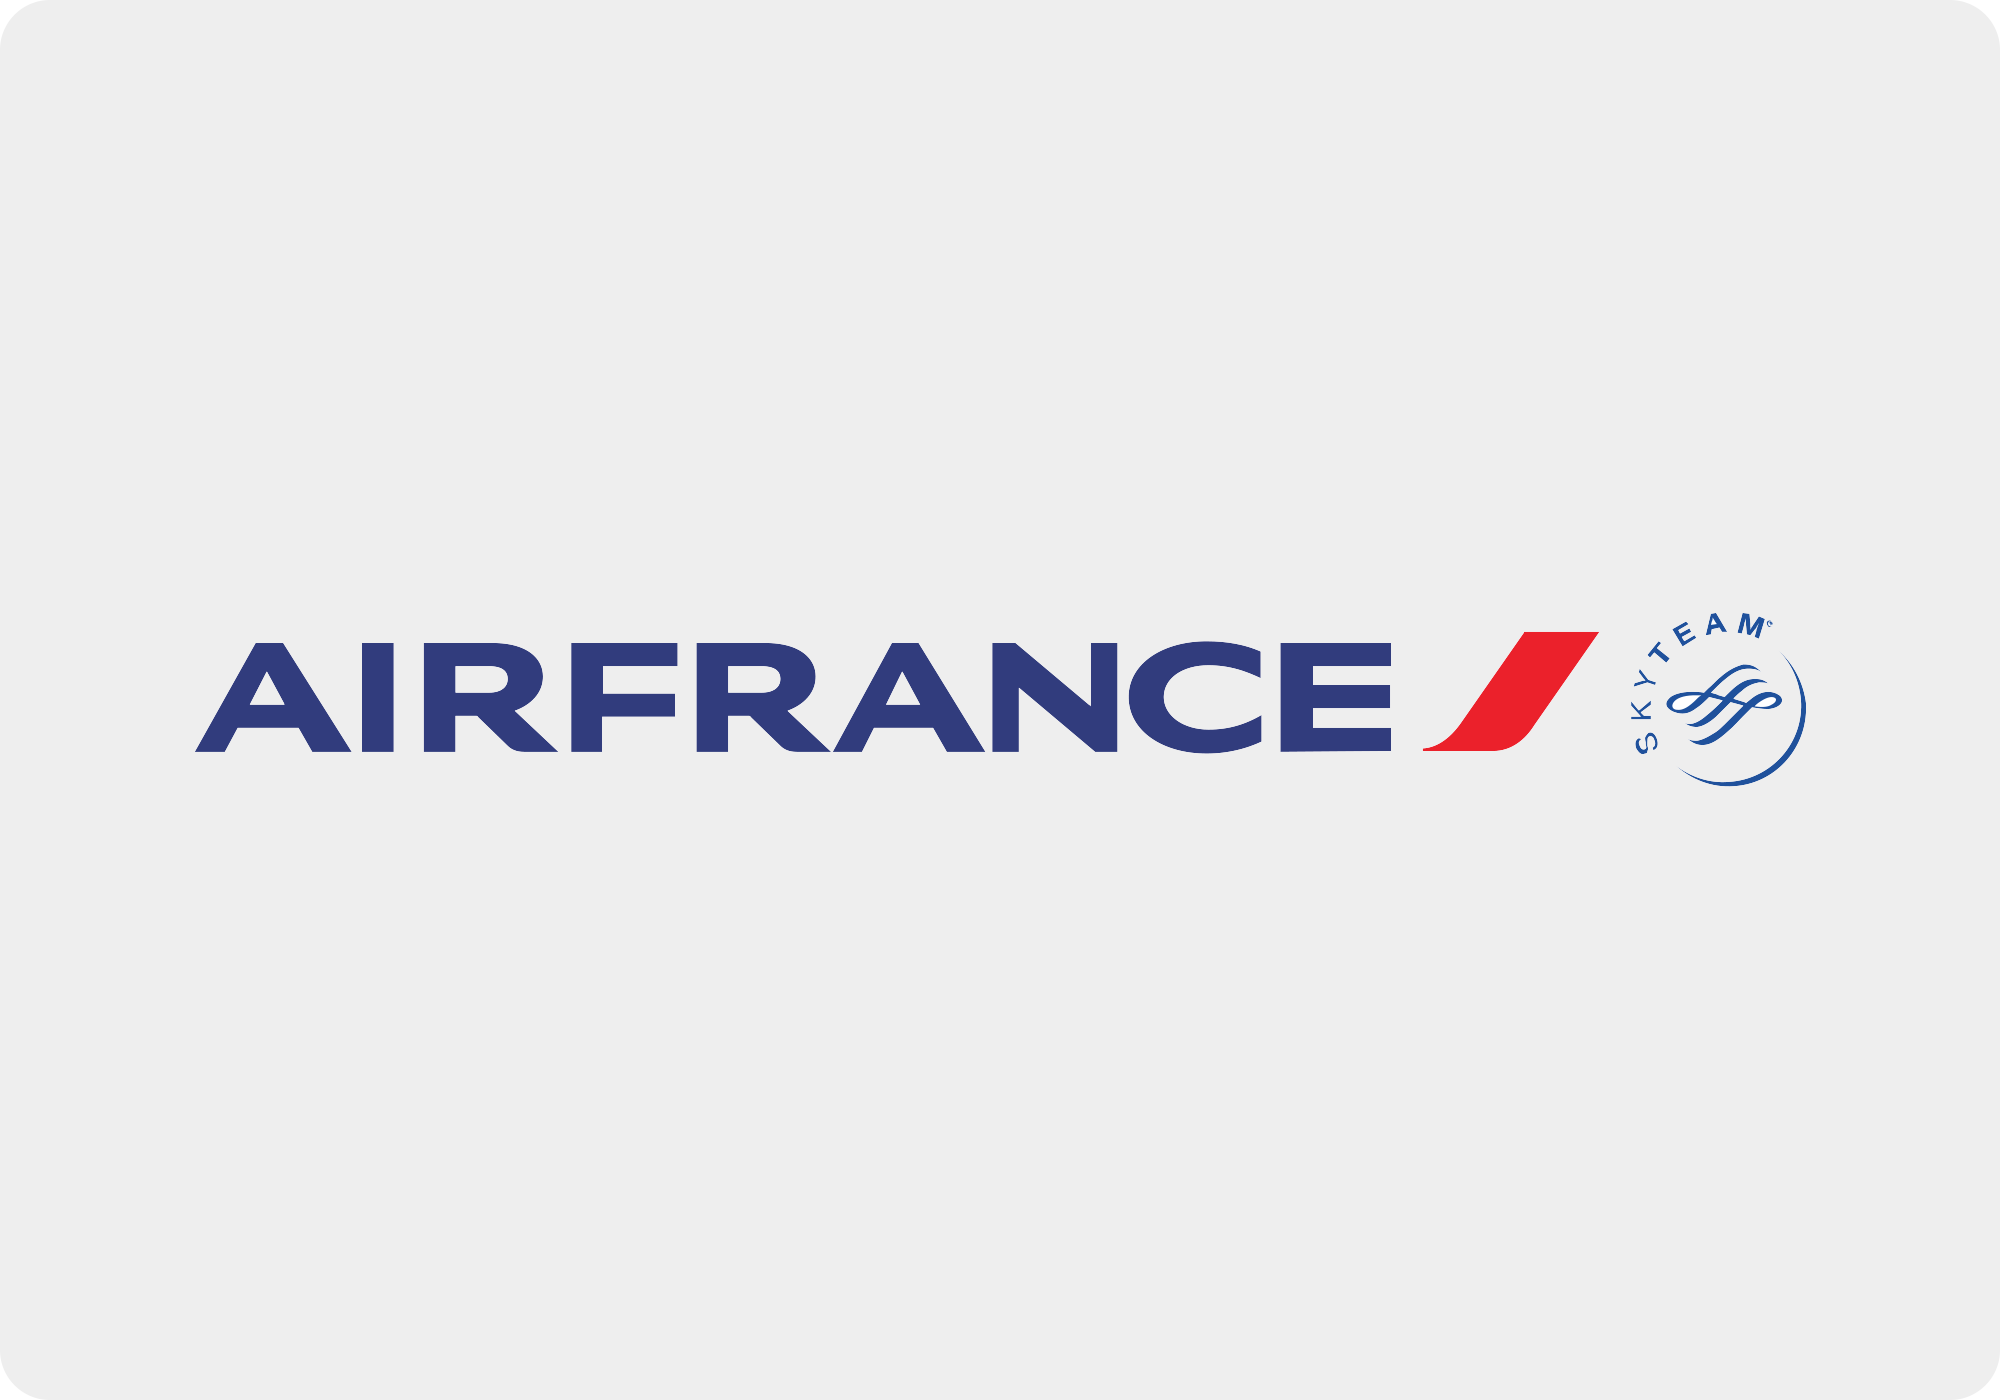 BARIN - Air France logo